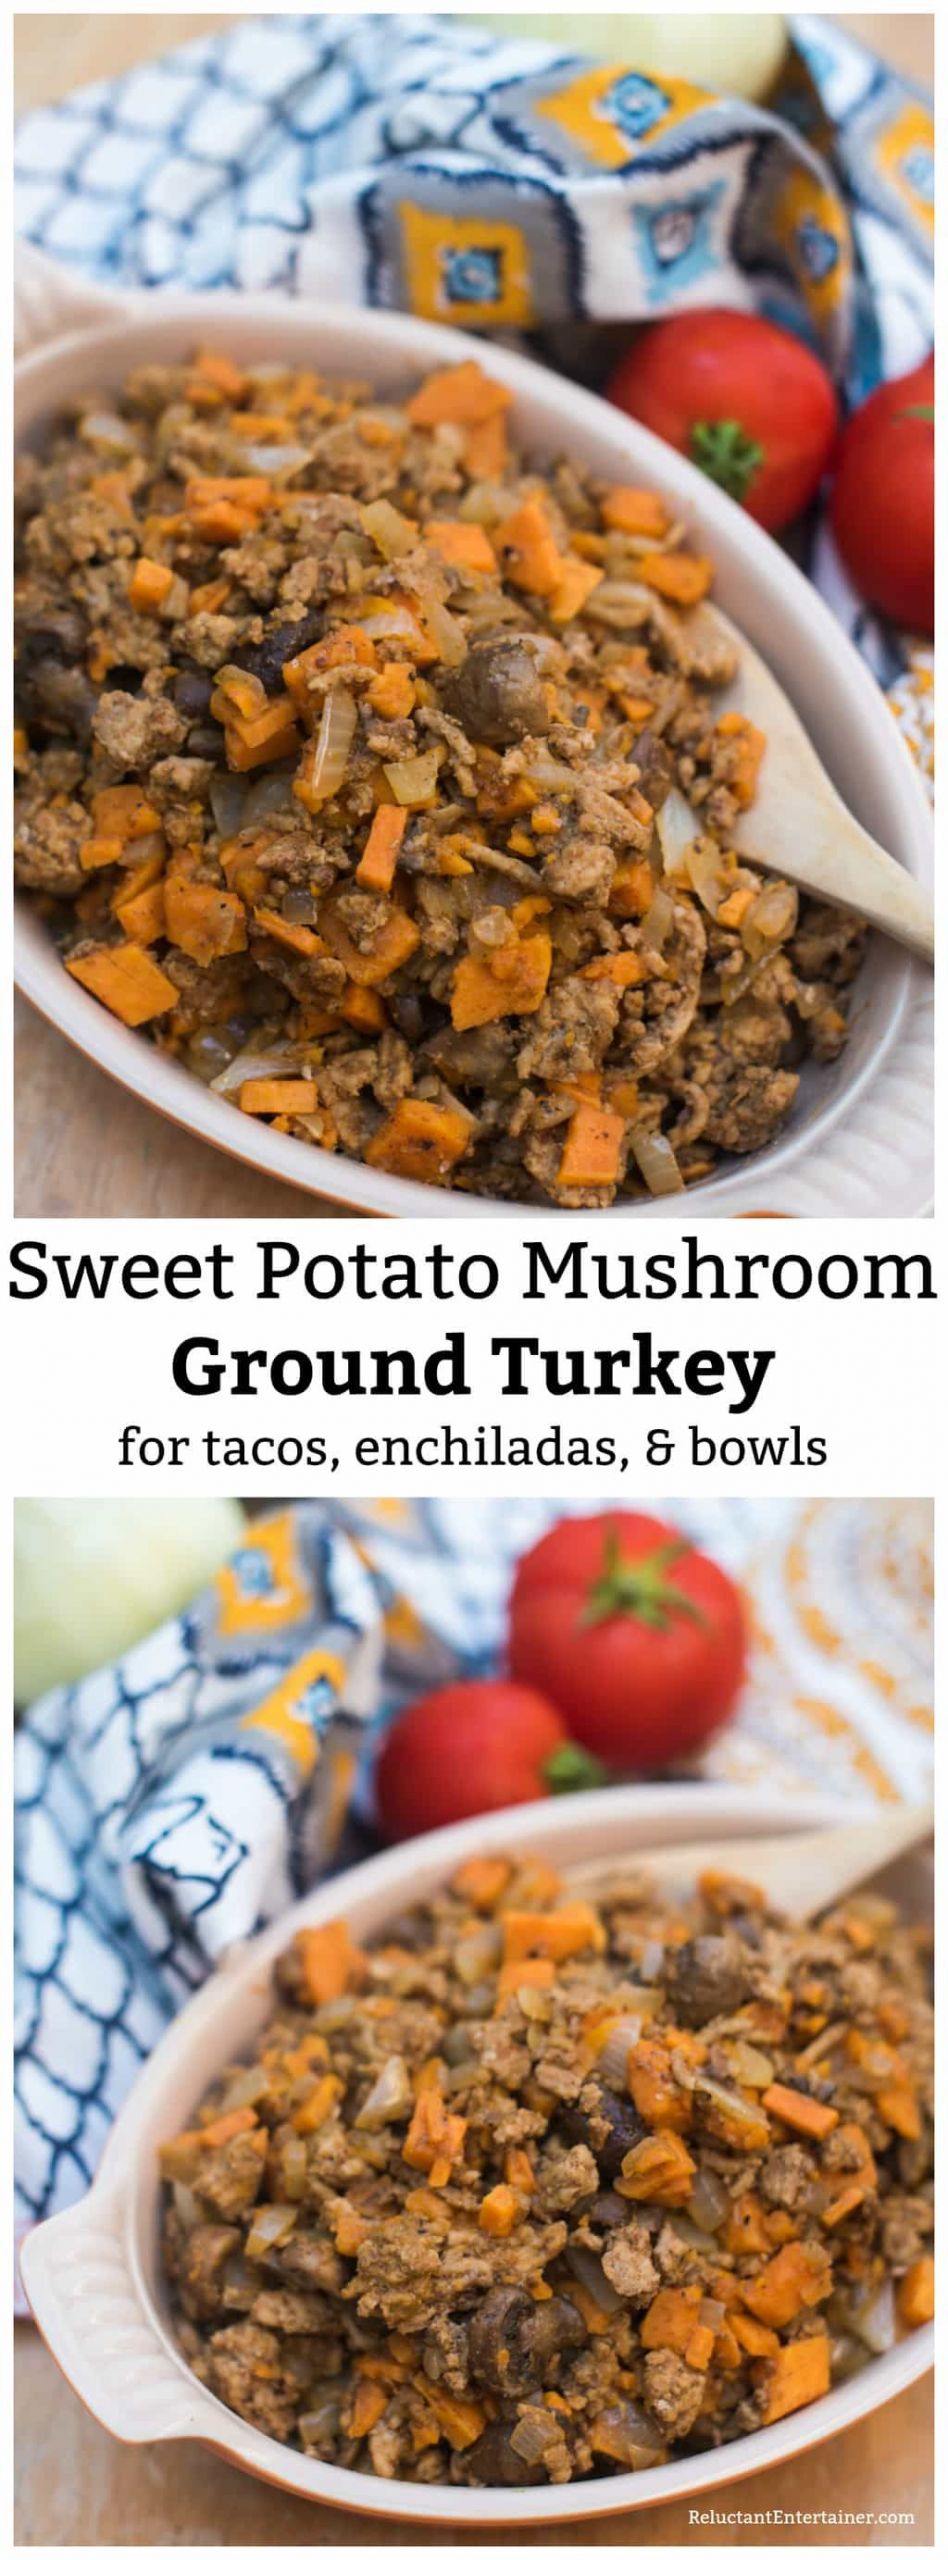 Ground Turkey And Mushrooms Recipe
 Sweet Potato Mushroom Ground Turkey With images